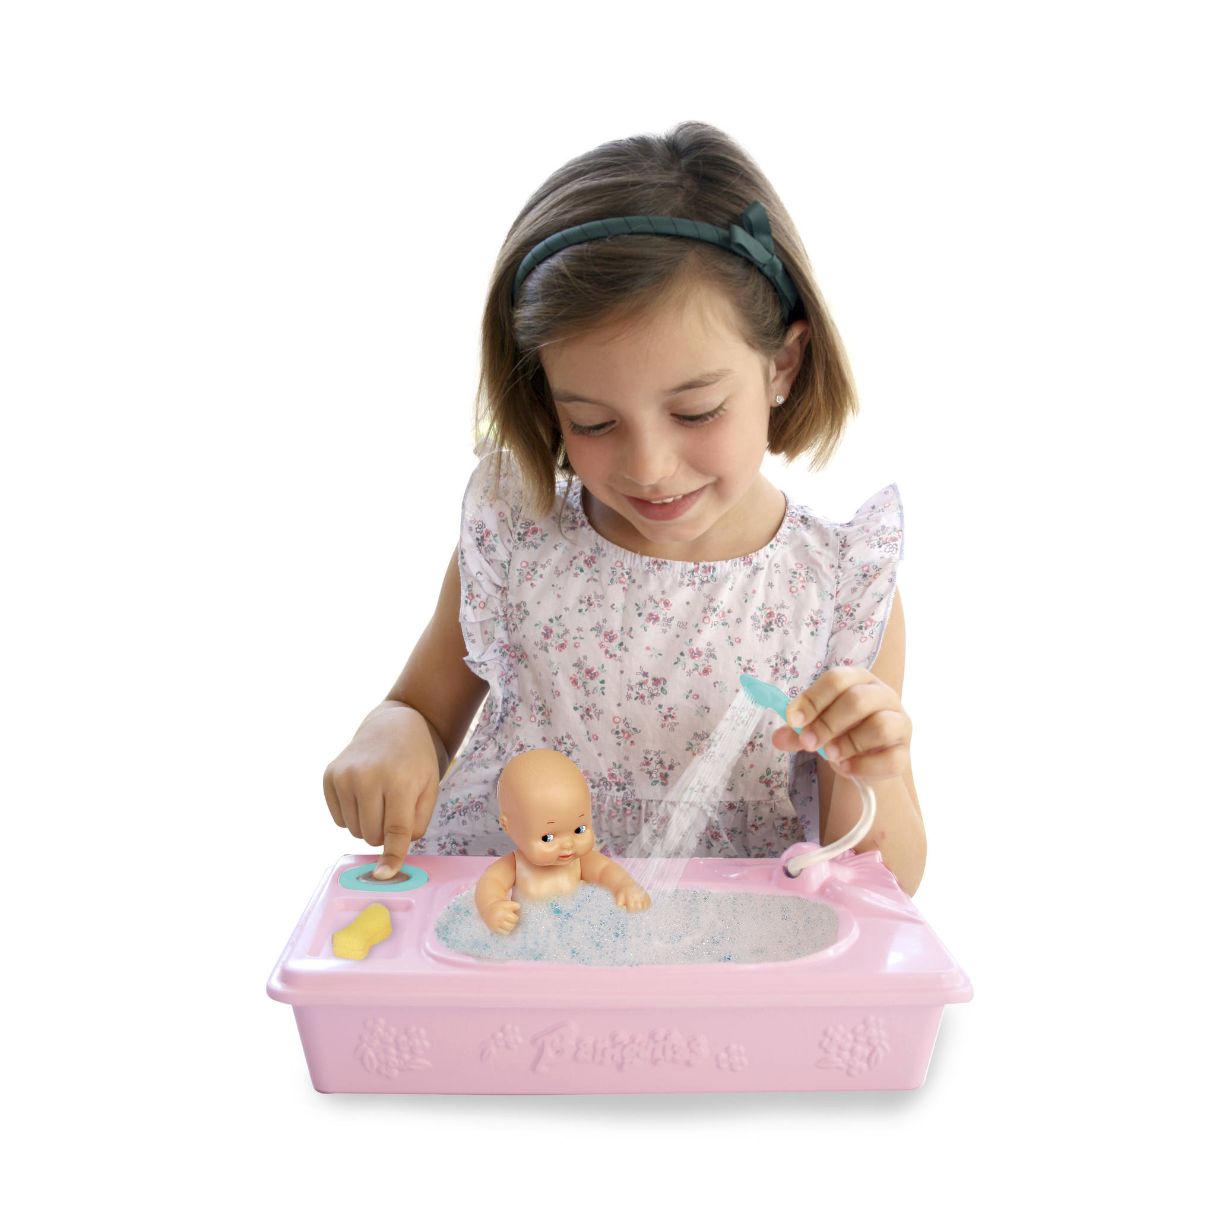 Esponja de baño para bebes Extra suave - Baby World Shop